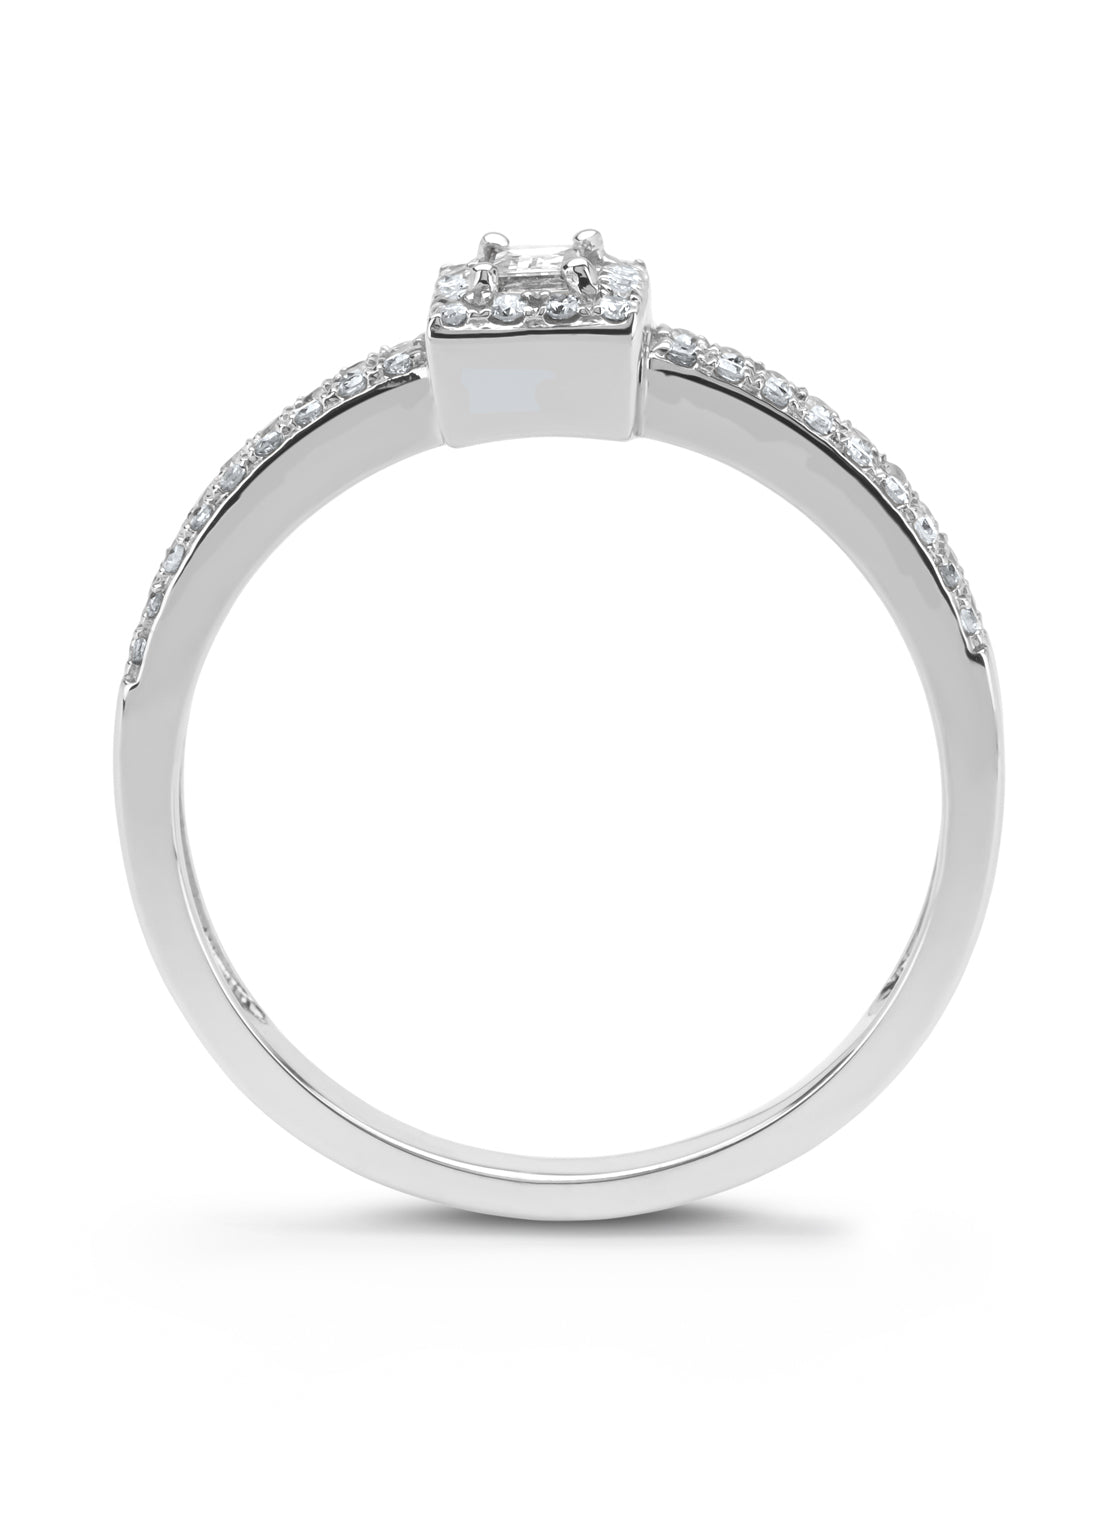 White gold ring, 0.26 ct diamond, petite romance